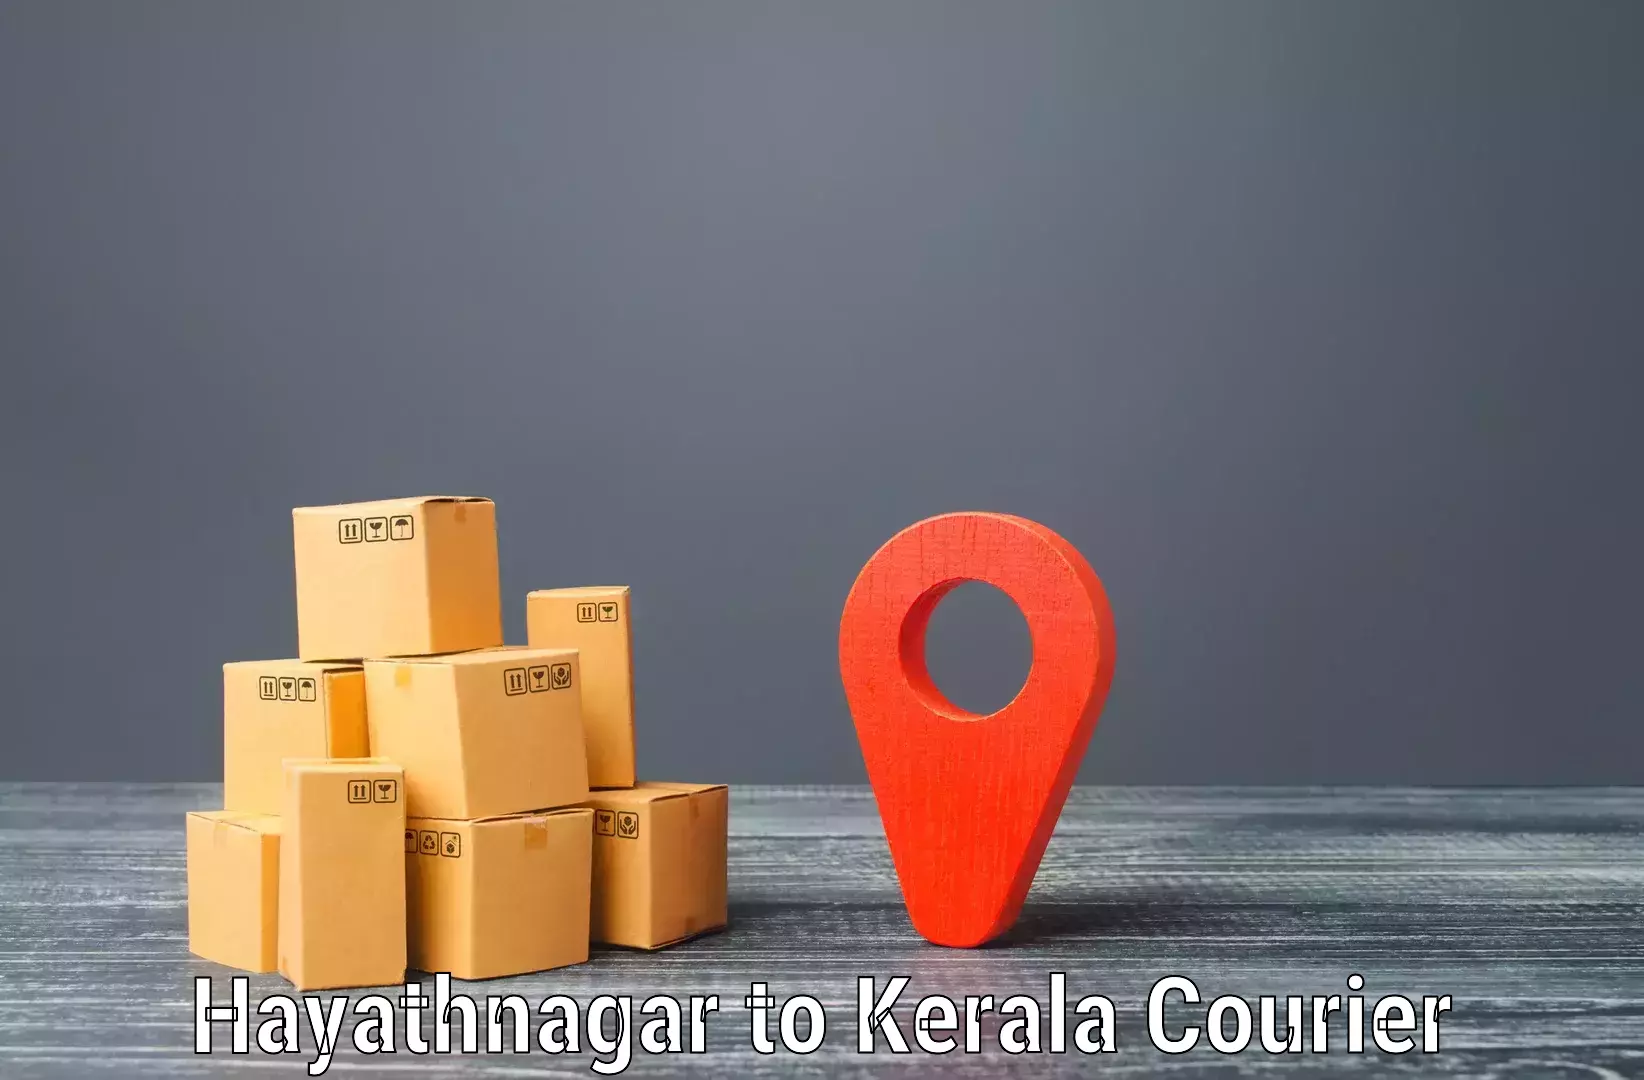 Tech-enabled shipping Hayathnagar to Kochi